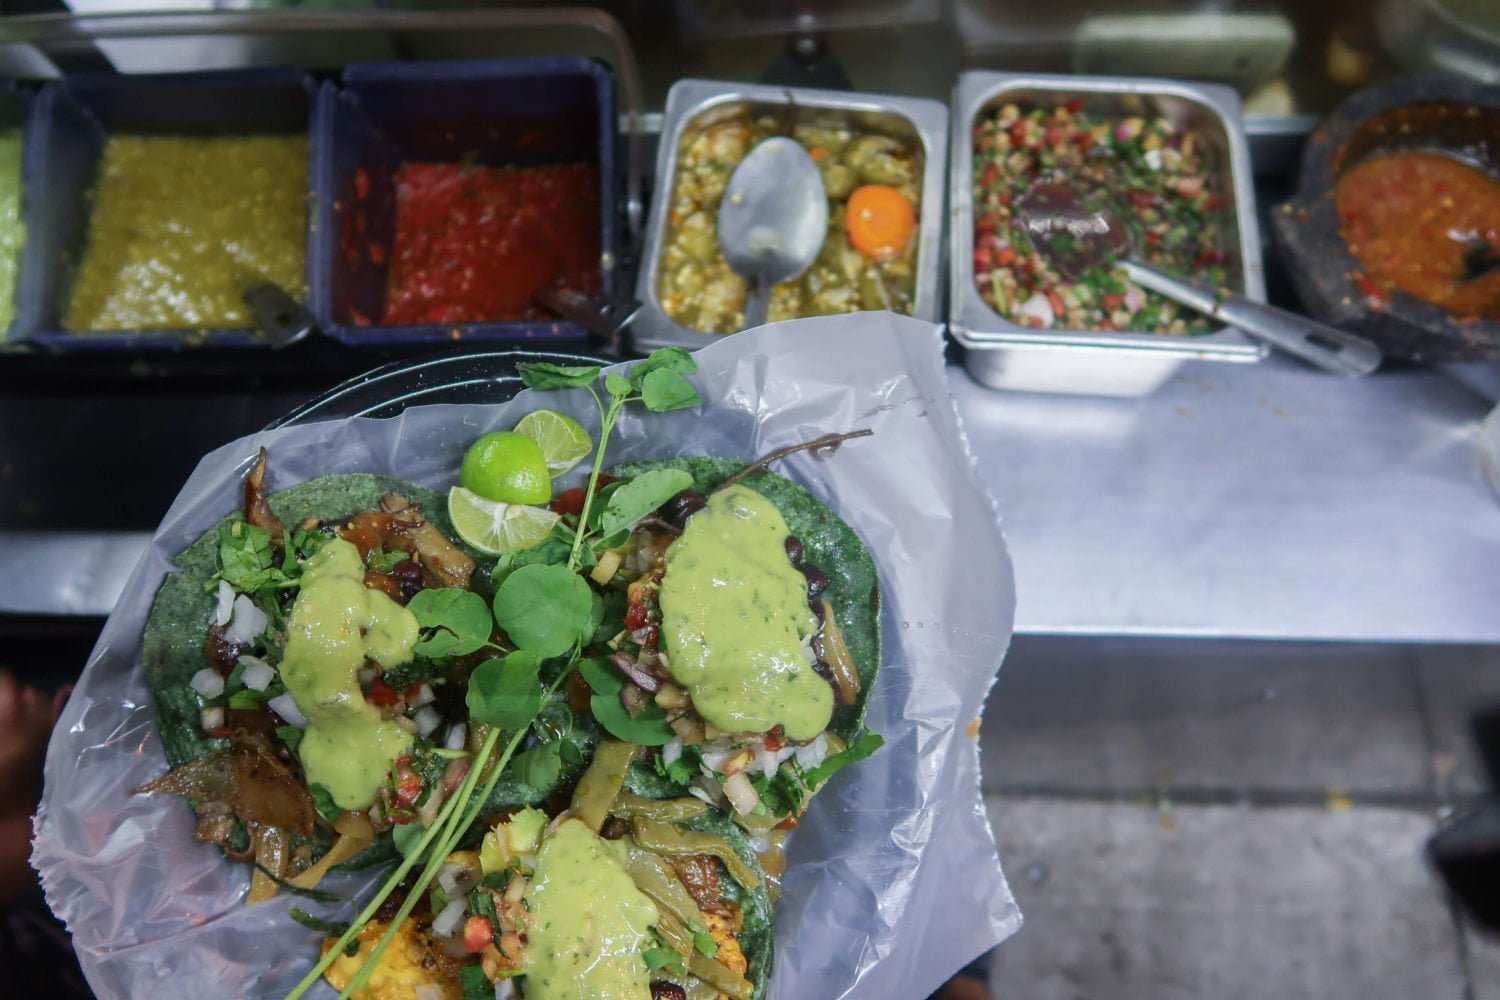 por siempre vegano vegan tacos how to eat like a local in mexico city